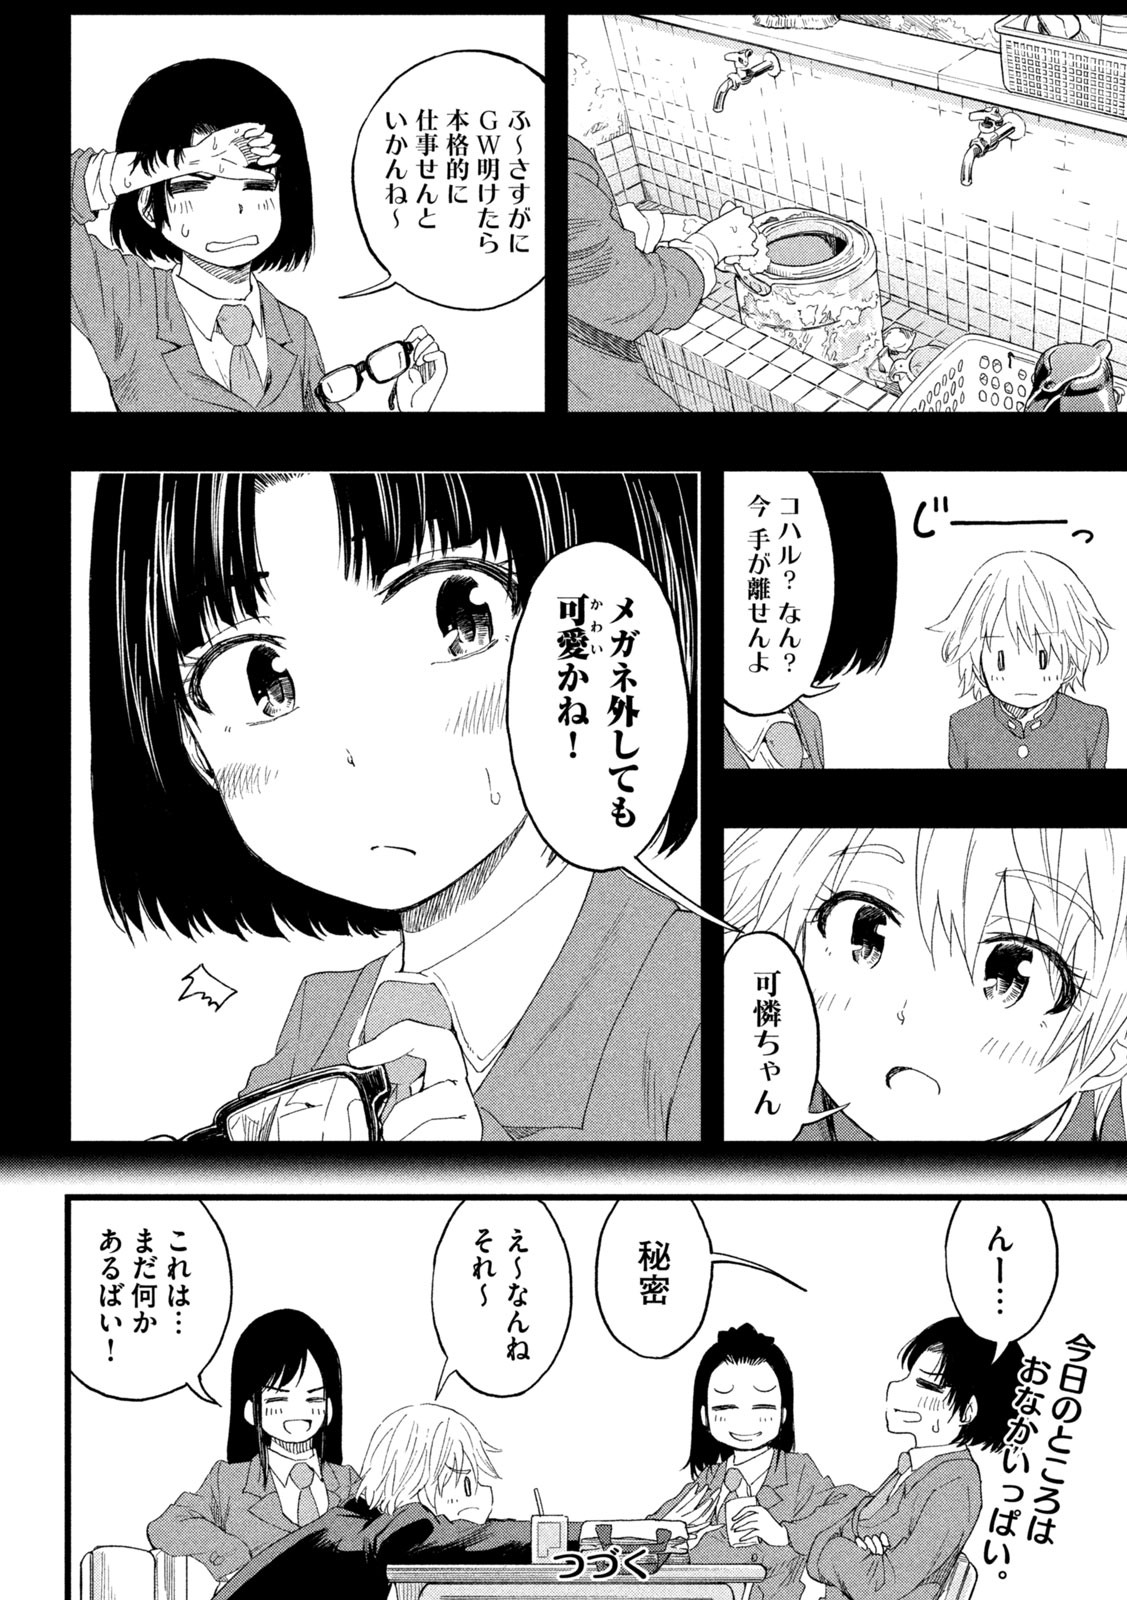 Koharu haru! - Chapter 59 - Page 8